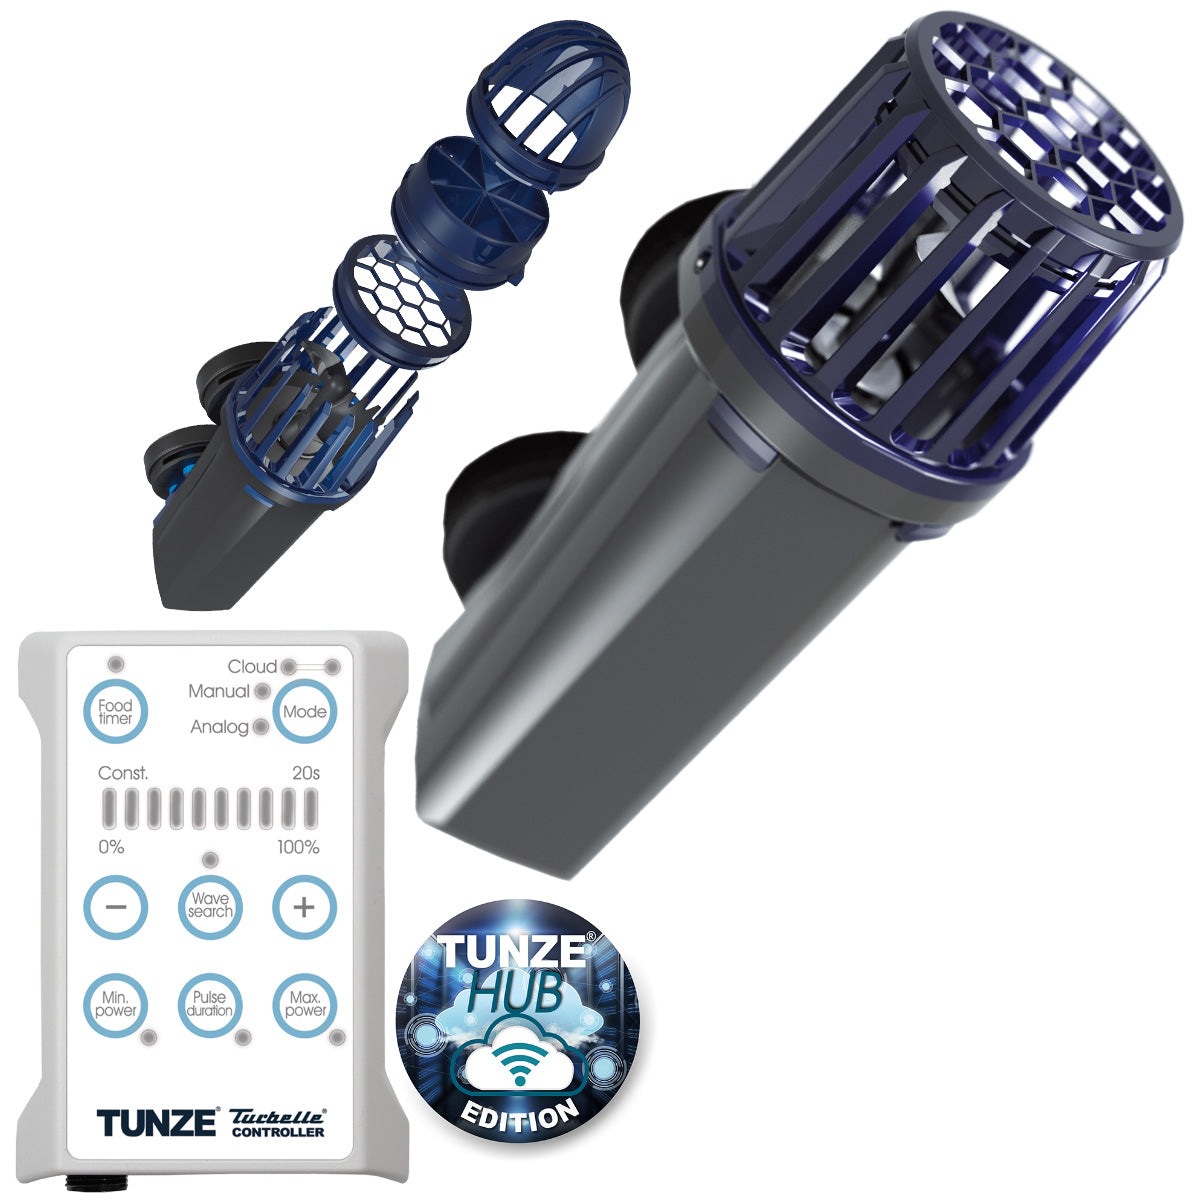 Tunze Turbelle stream 3 Plus HUB Edition